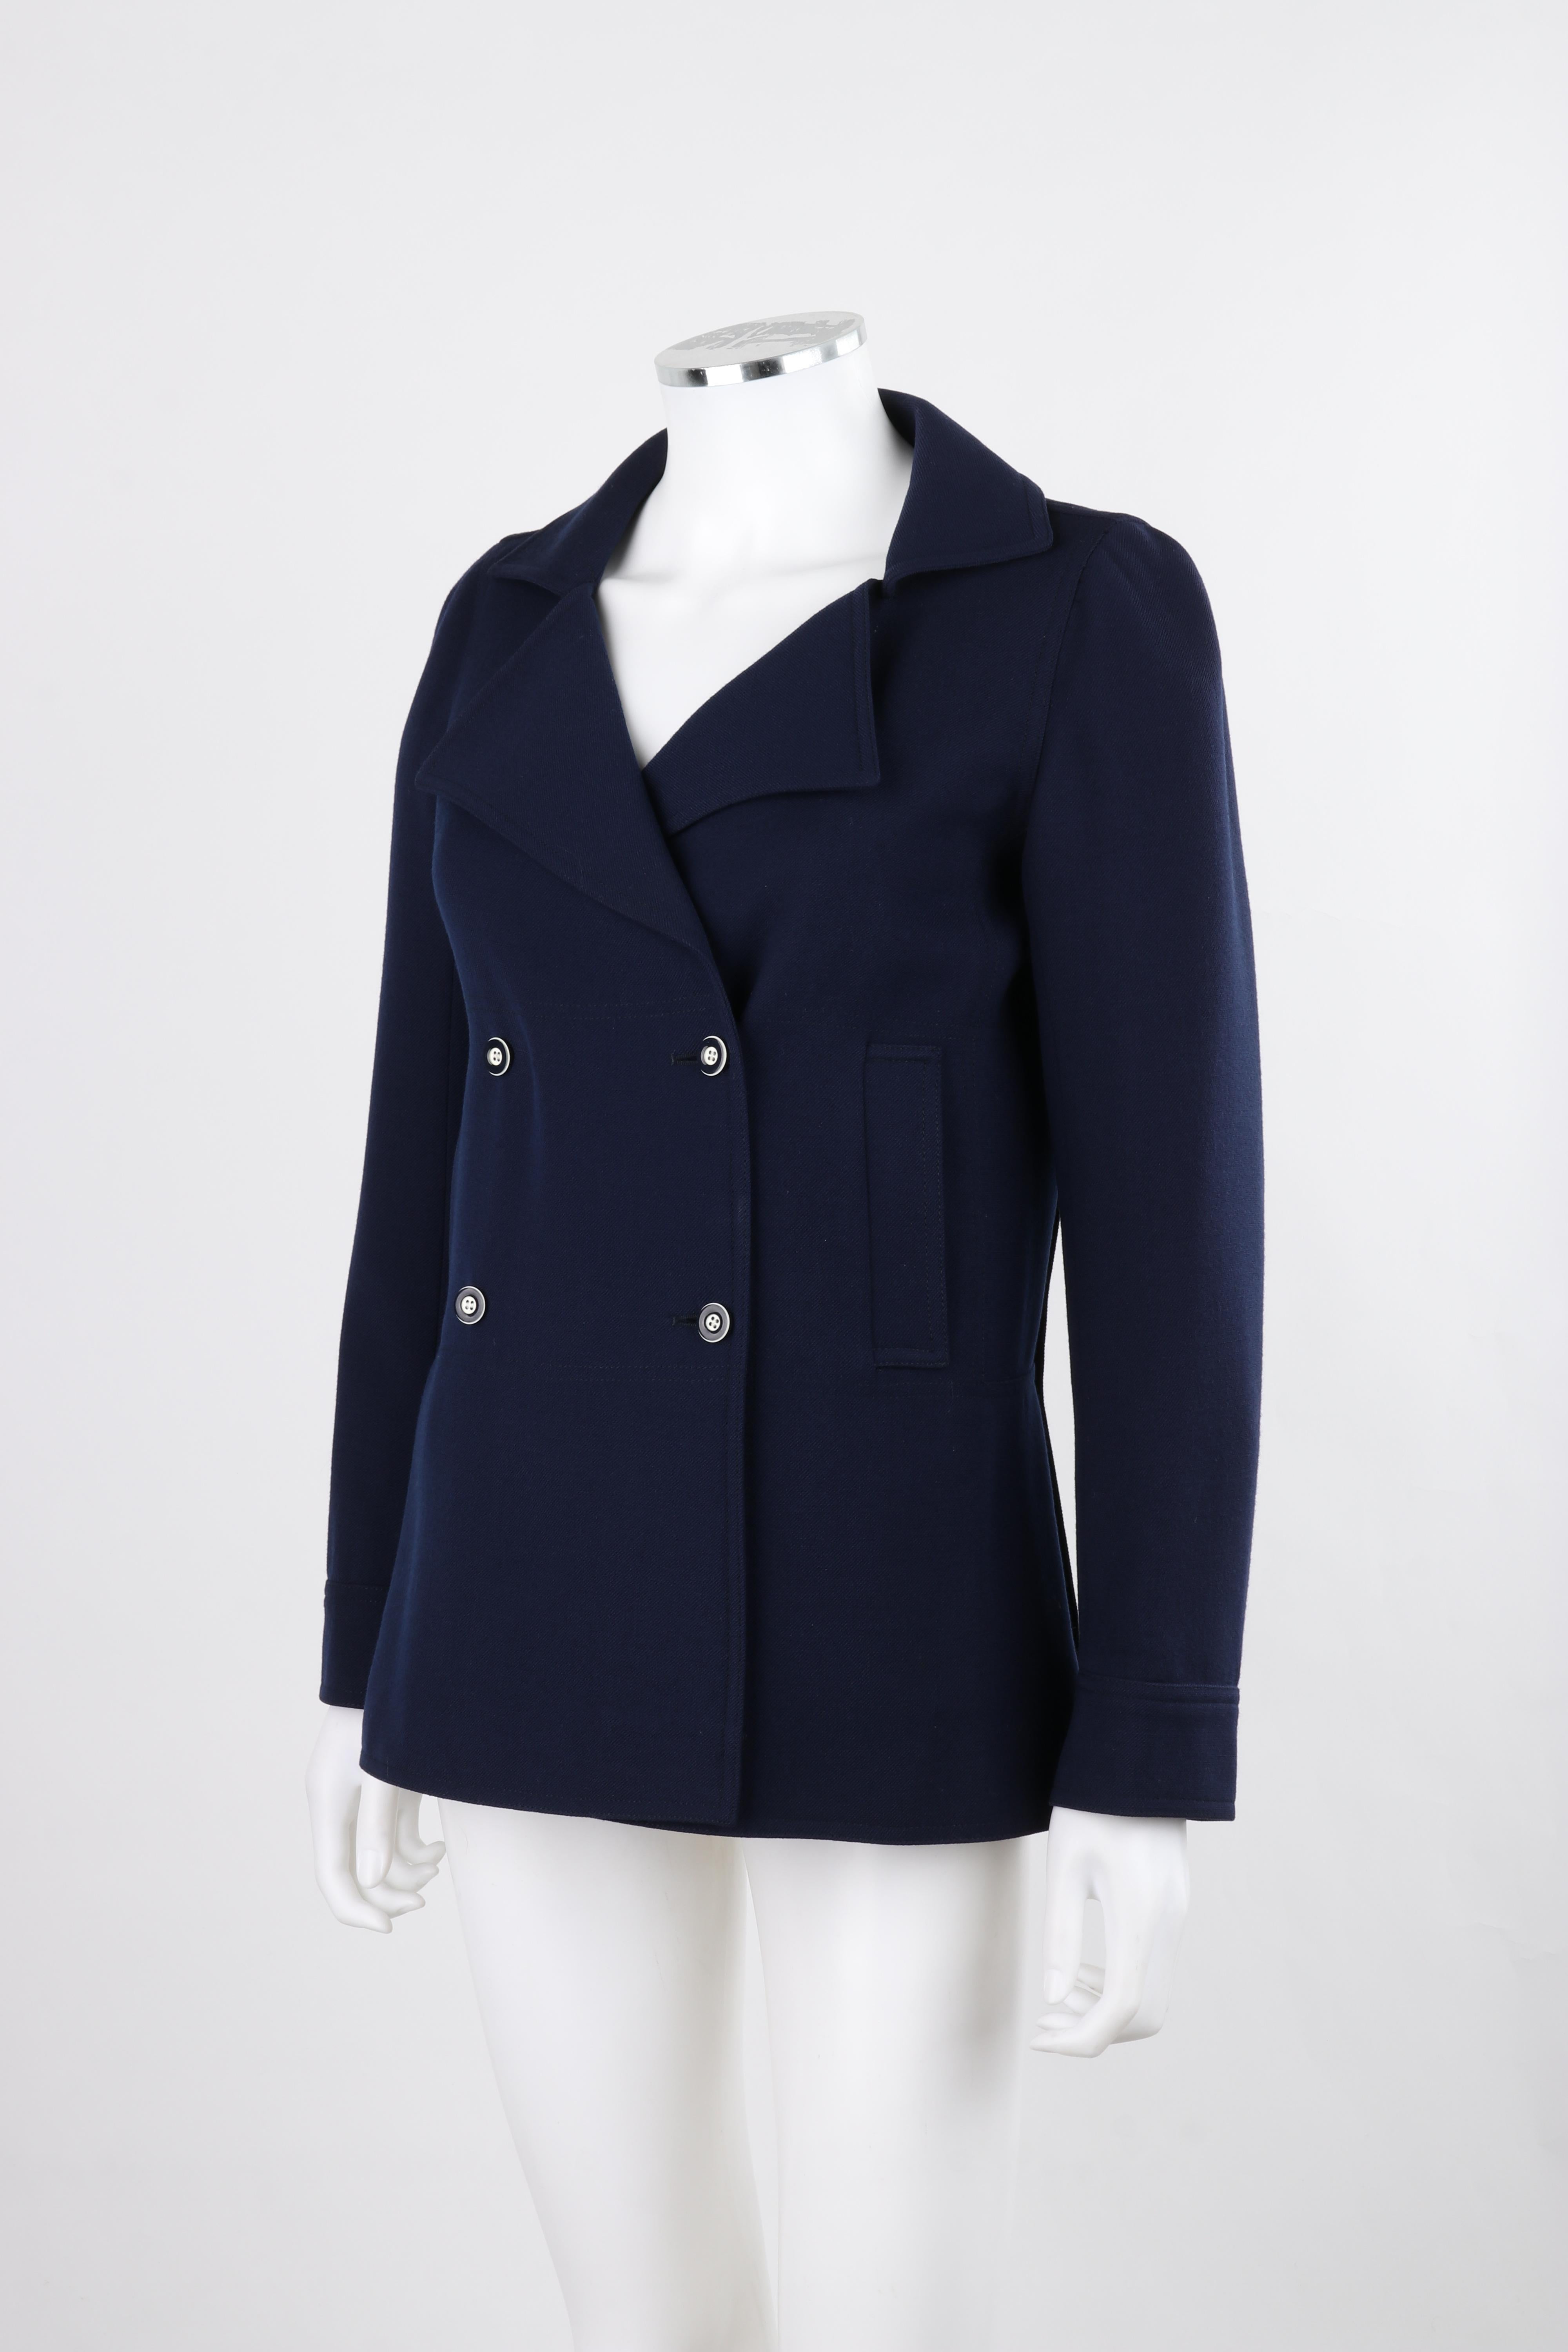 COURREGES PARIS c.1970's Vtg Navy Blue Wool Double Breasted Blazer Jacket  For Sale 3